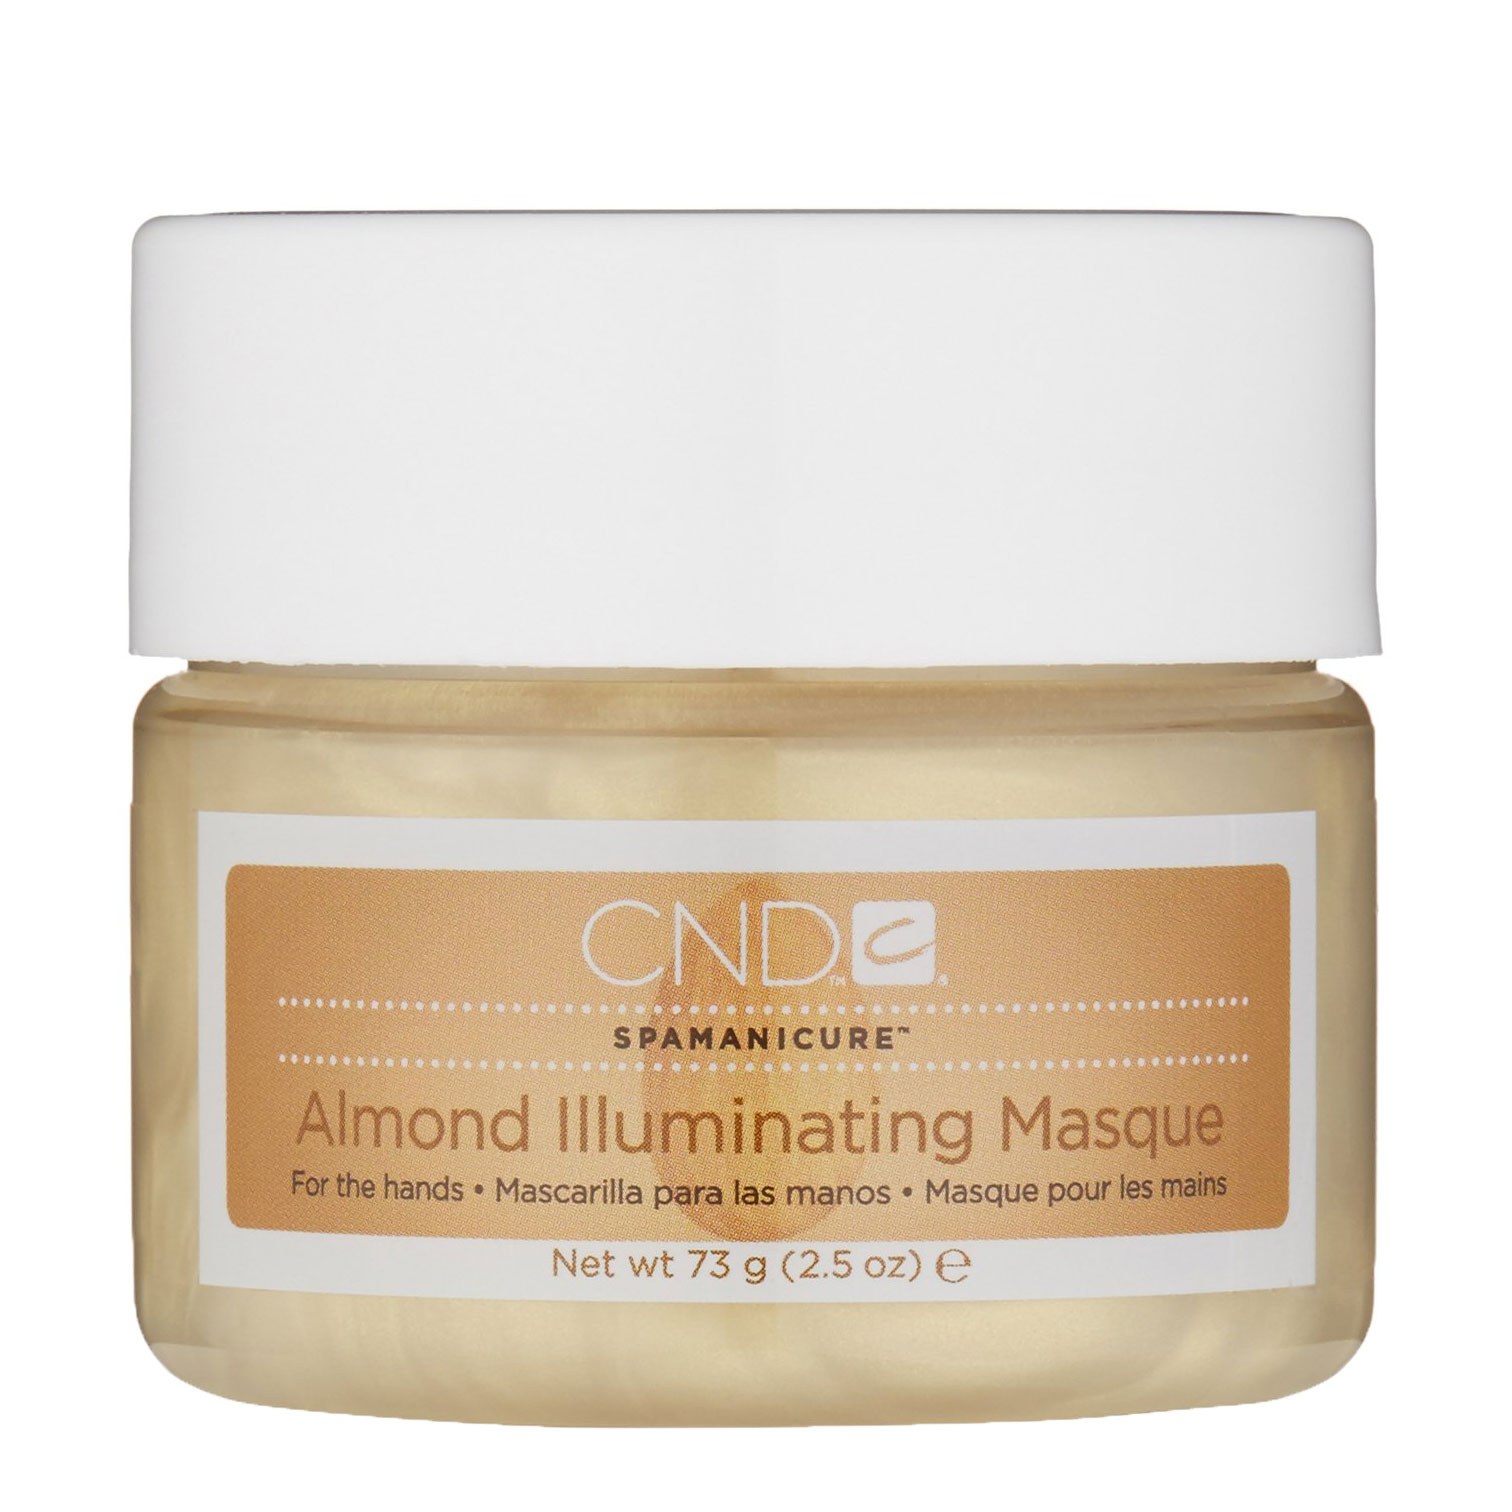 CND Almond Illuminating Masque